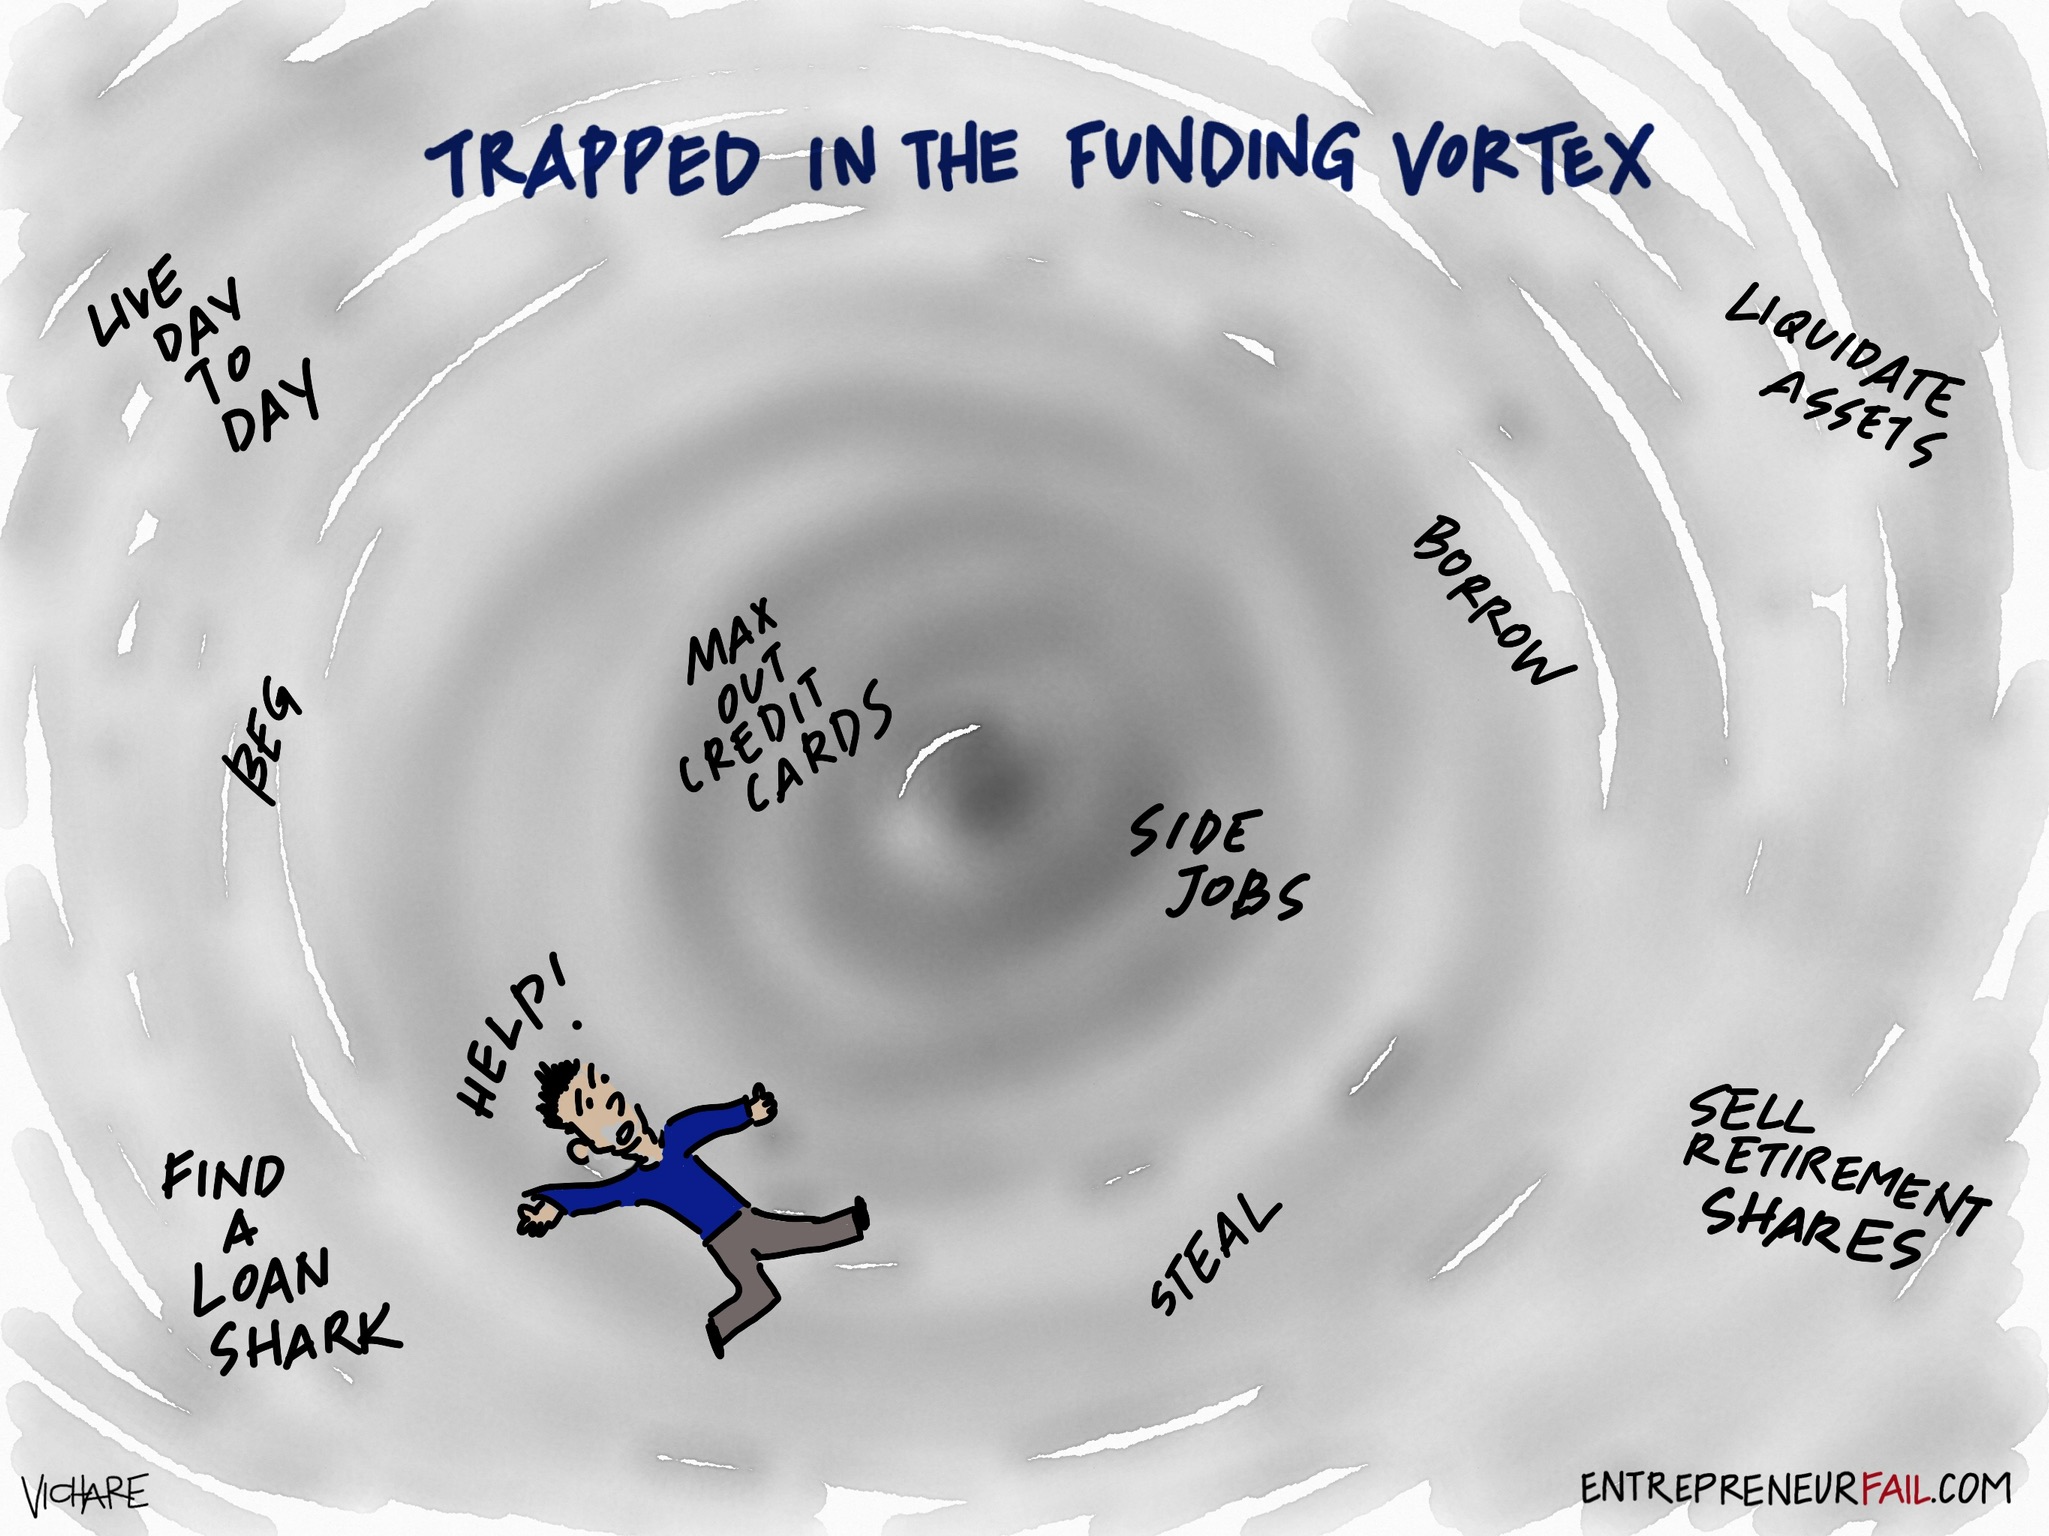 entrepreneurfail-funding-vortex